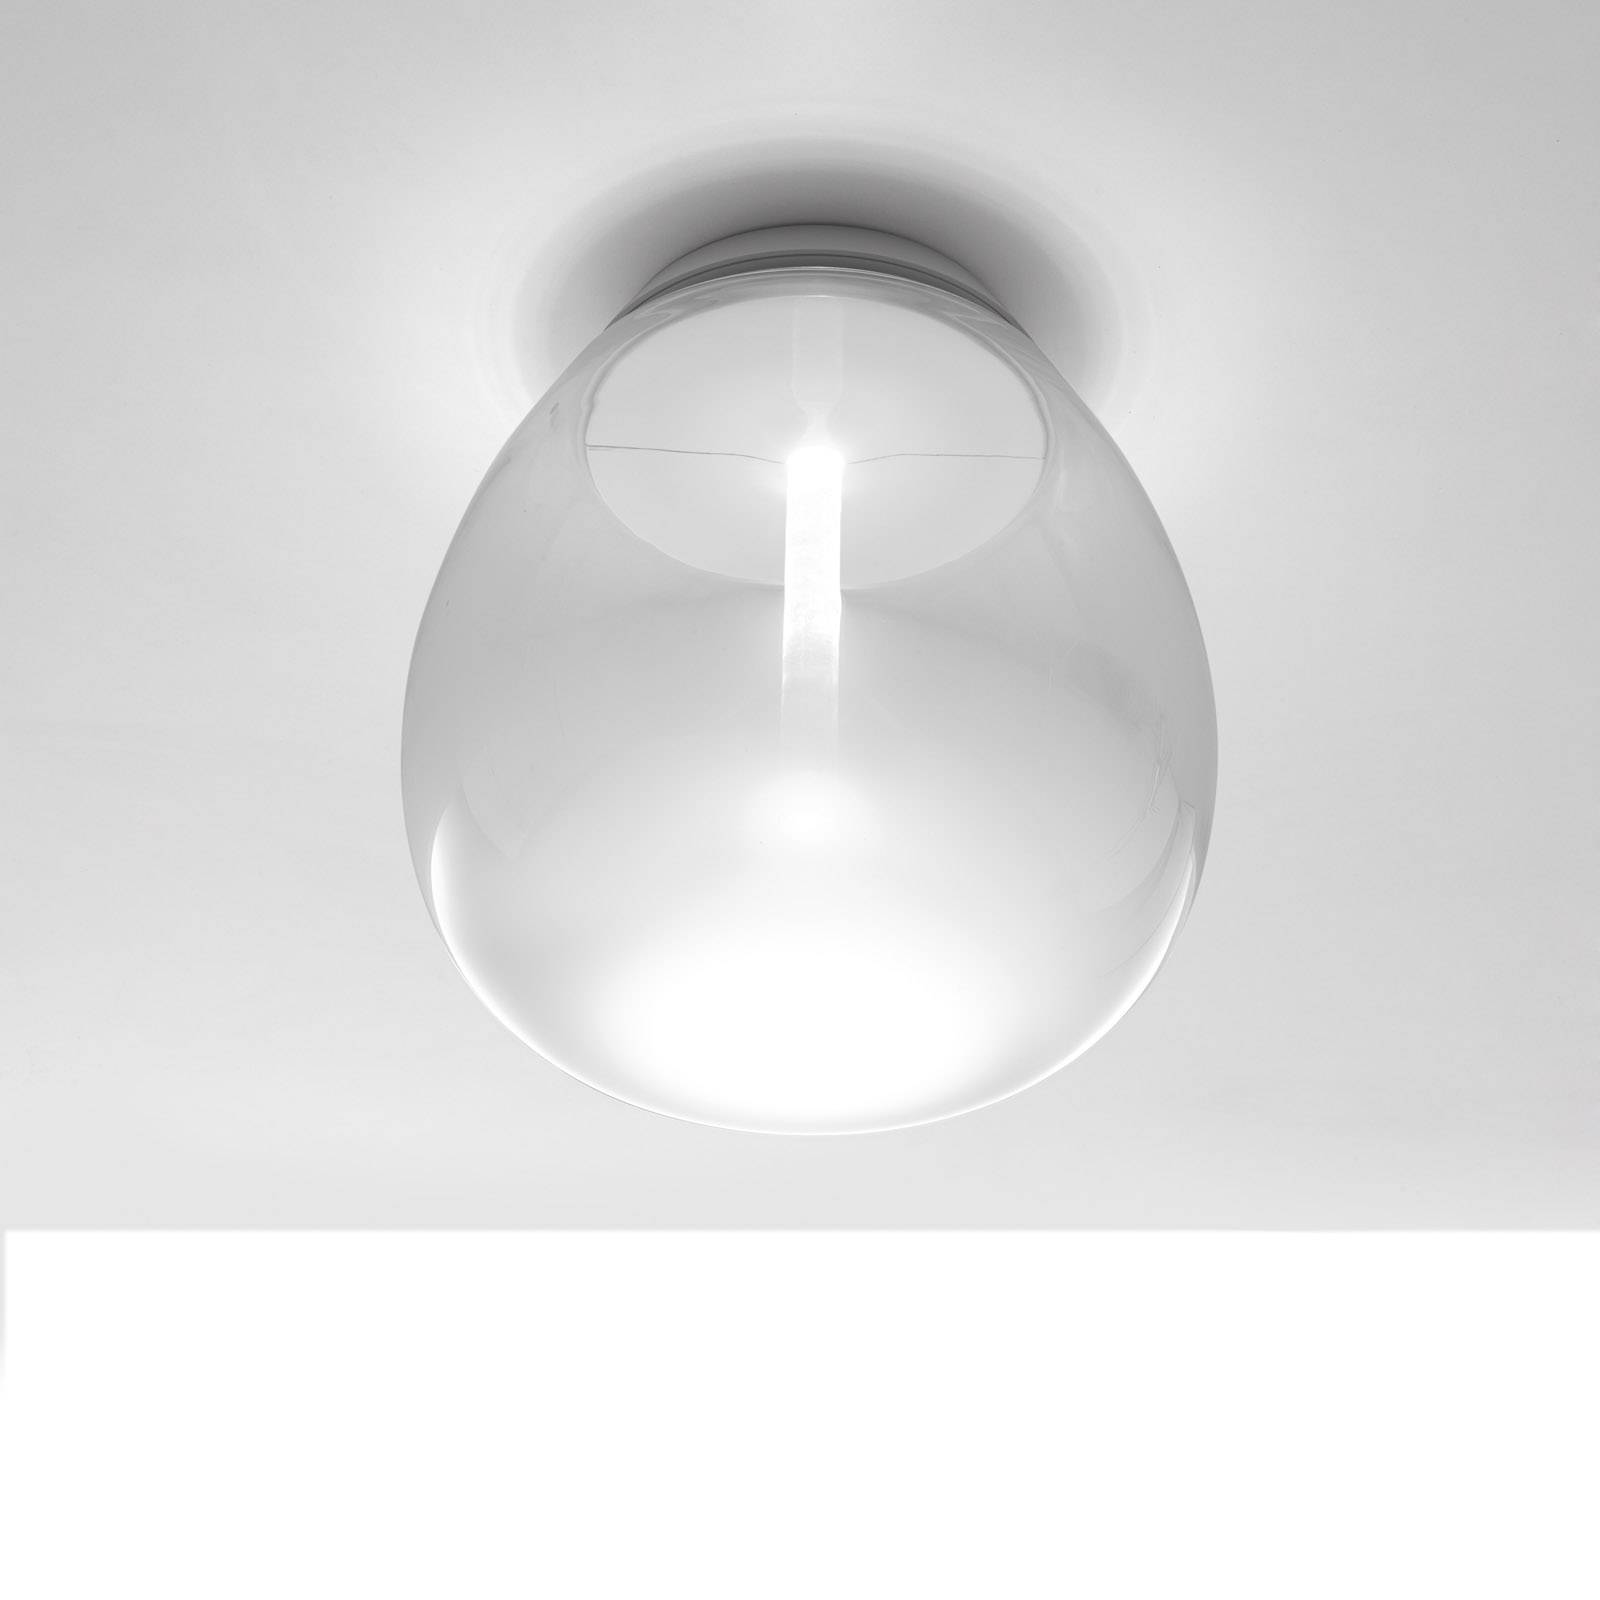 Artemide Stropní svítidlo Artemide Empatia LED, Ø 16 cm